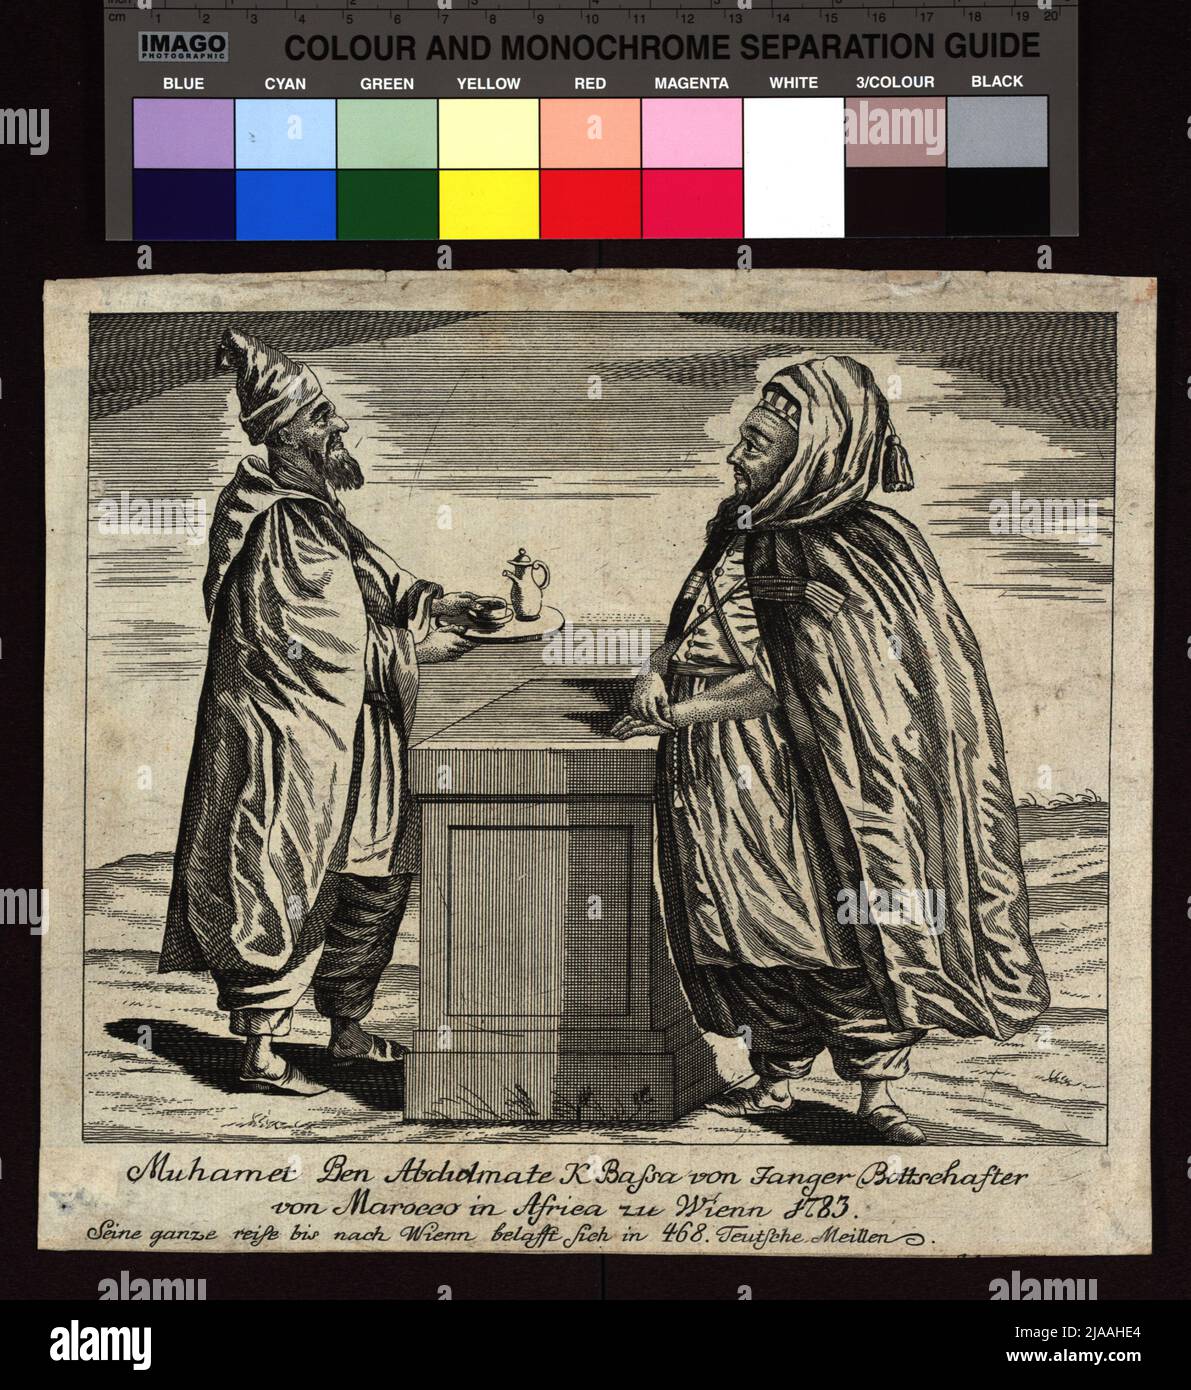 Mohamed Ben Abdulmate K. Bassa by Tanger Ambassador/ from Morocco in Africa zu Wienn 1783 '. Stock Photo